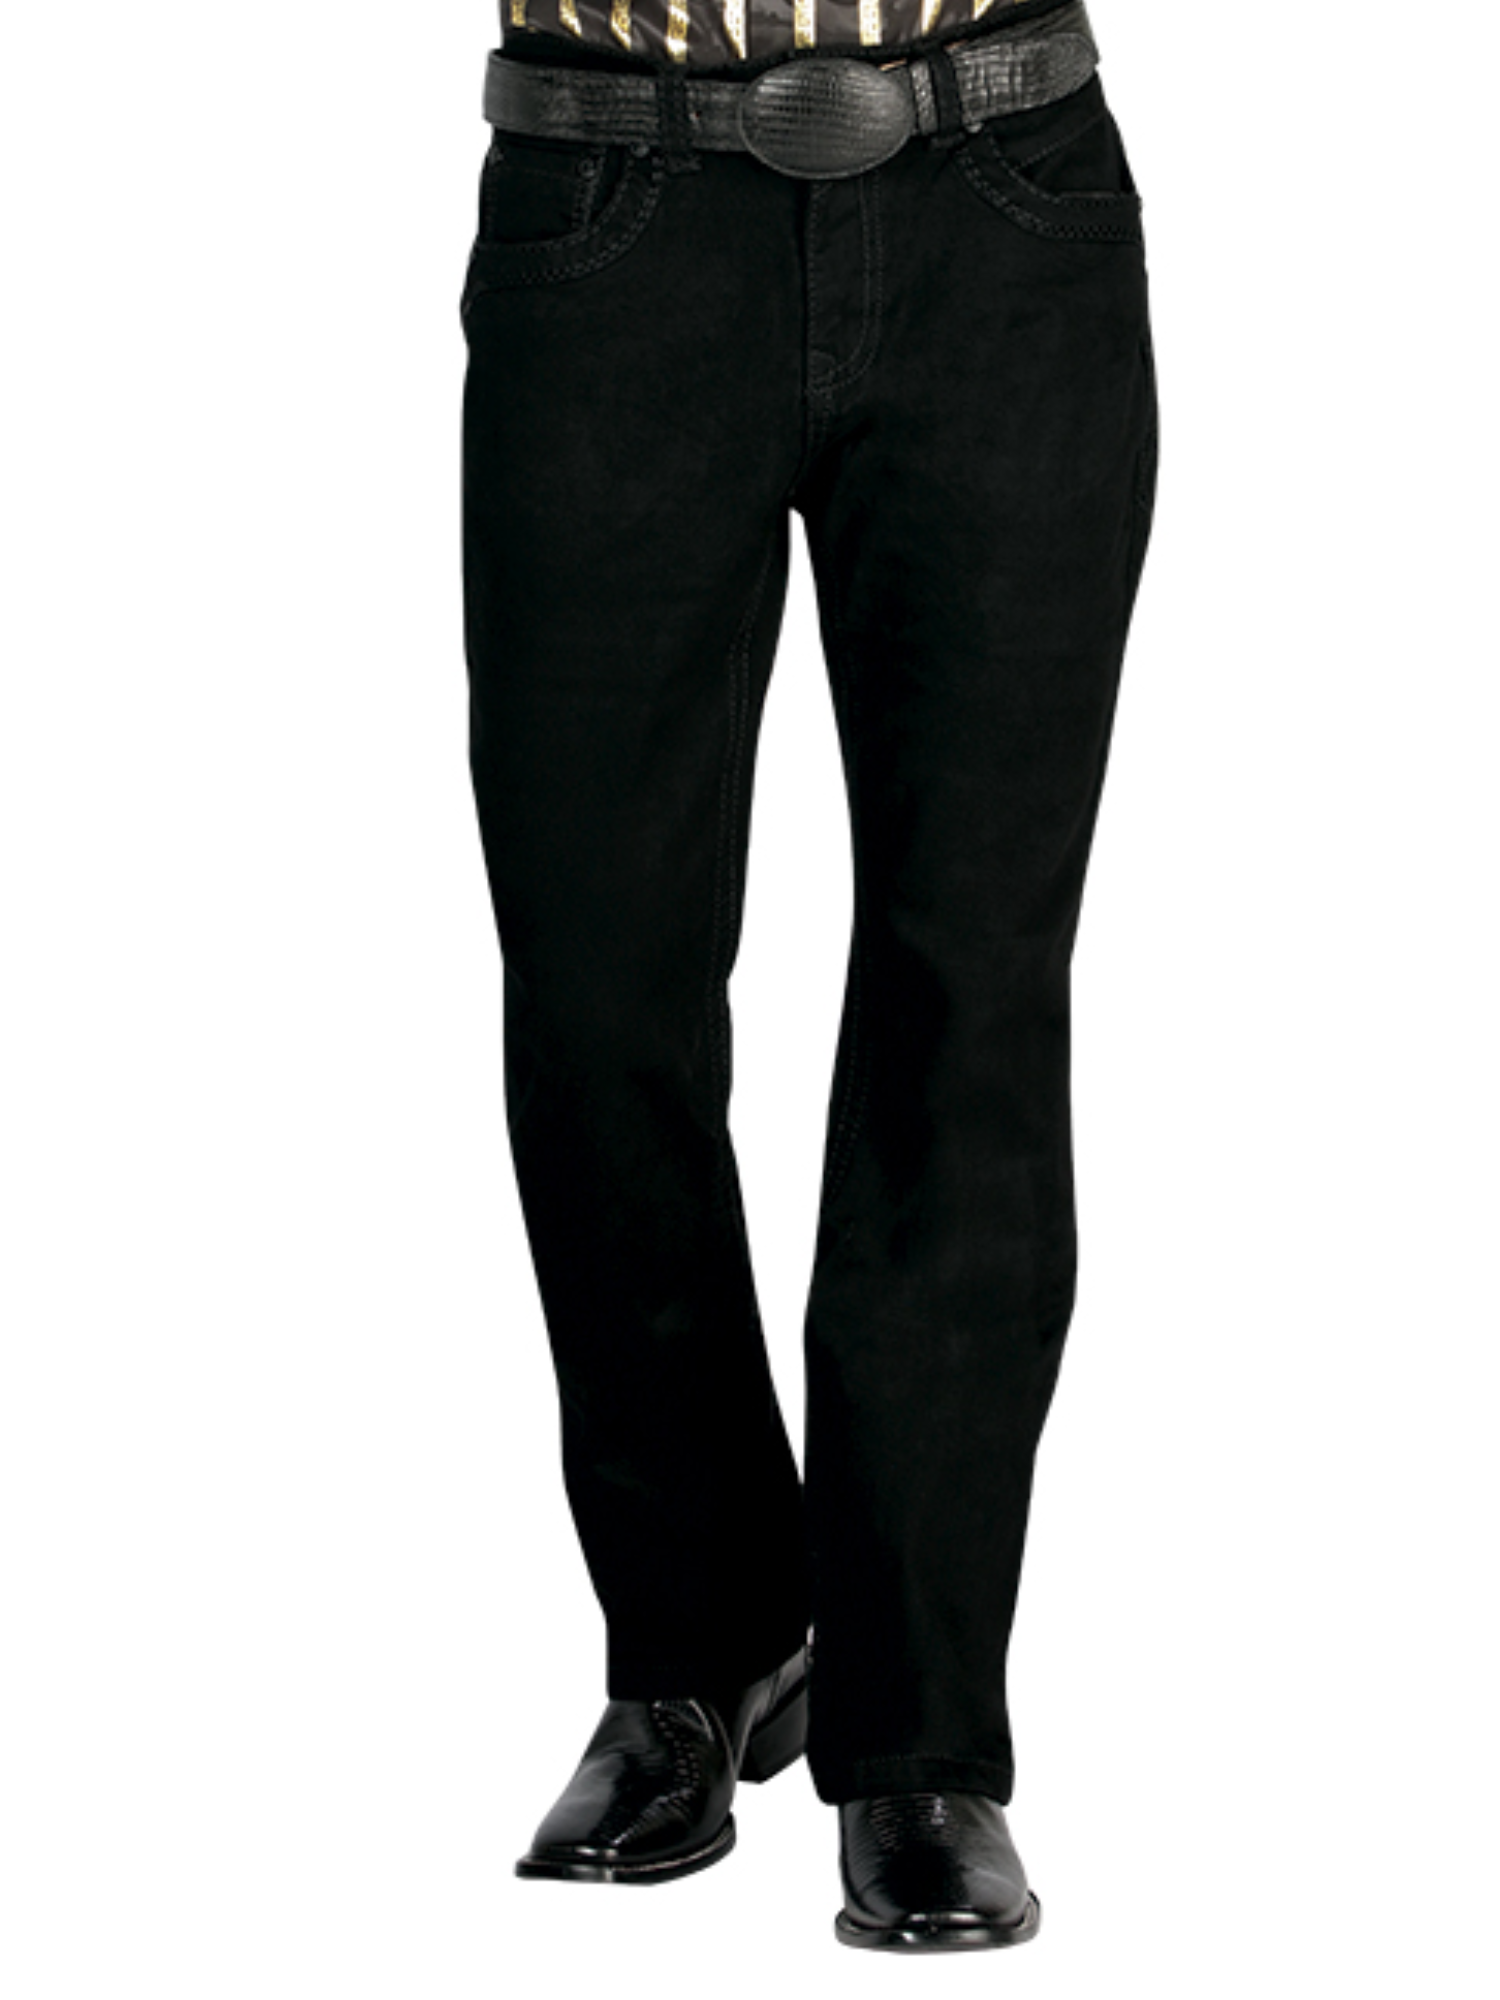 Pantalon Vaquero de Mezclilla Boot Cut Negro para Hombre 'Centenario' - ID: 44840 Pantalones de Vaquero Centenario 